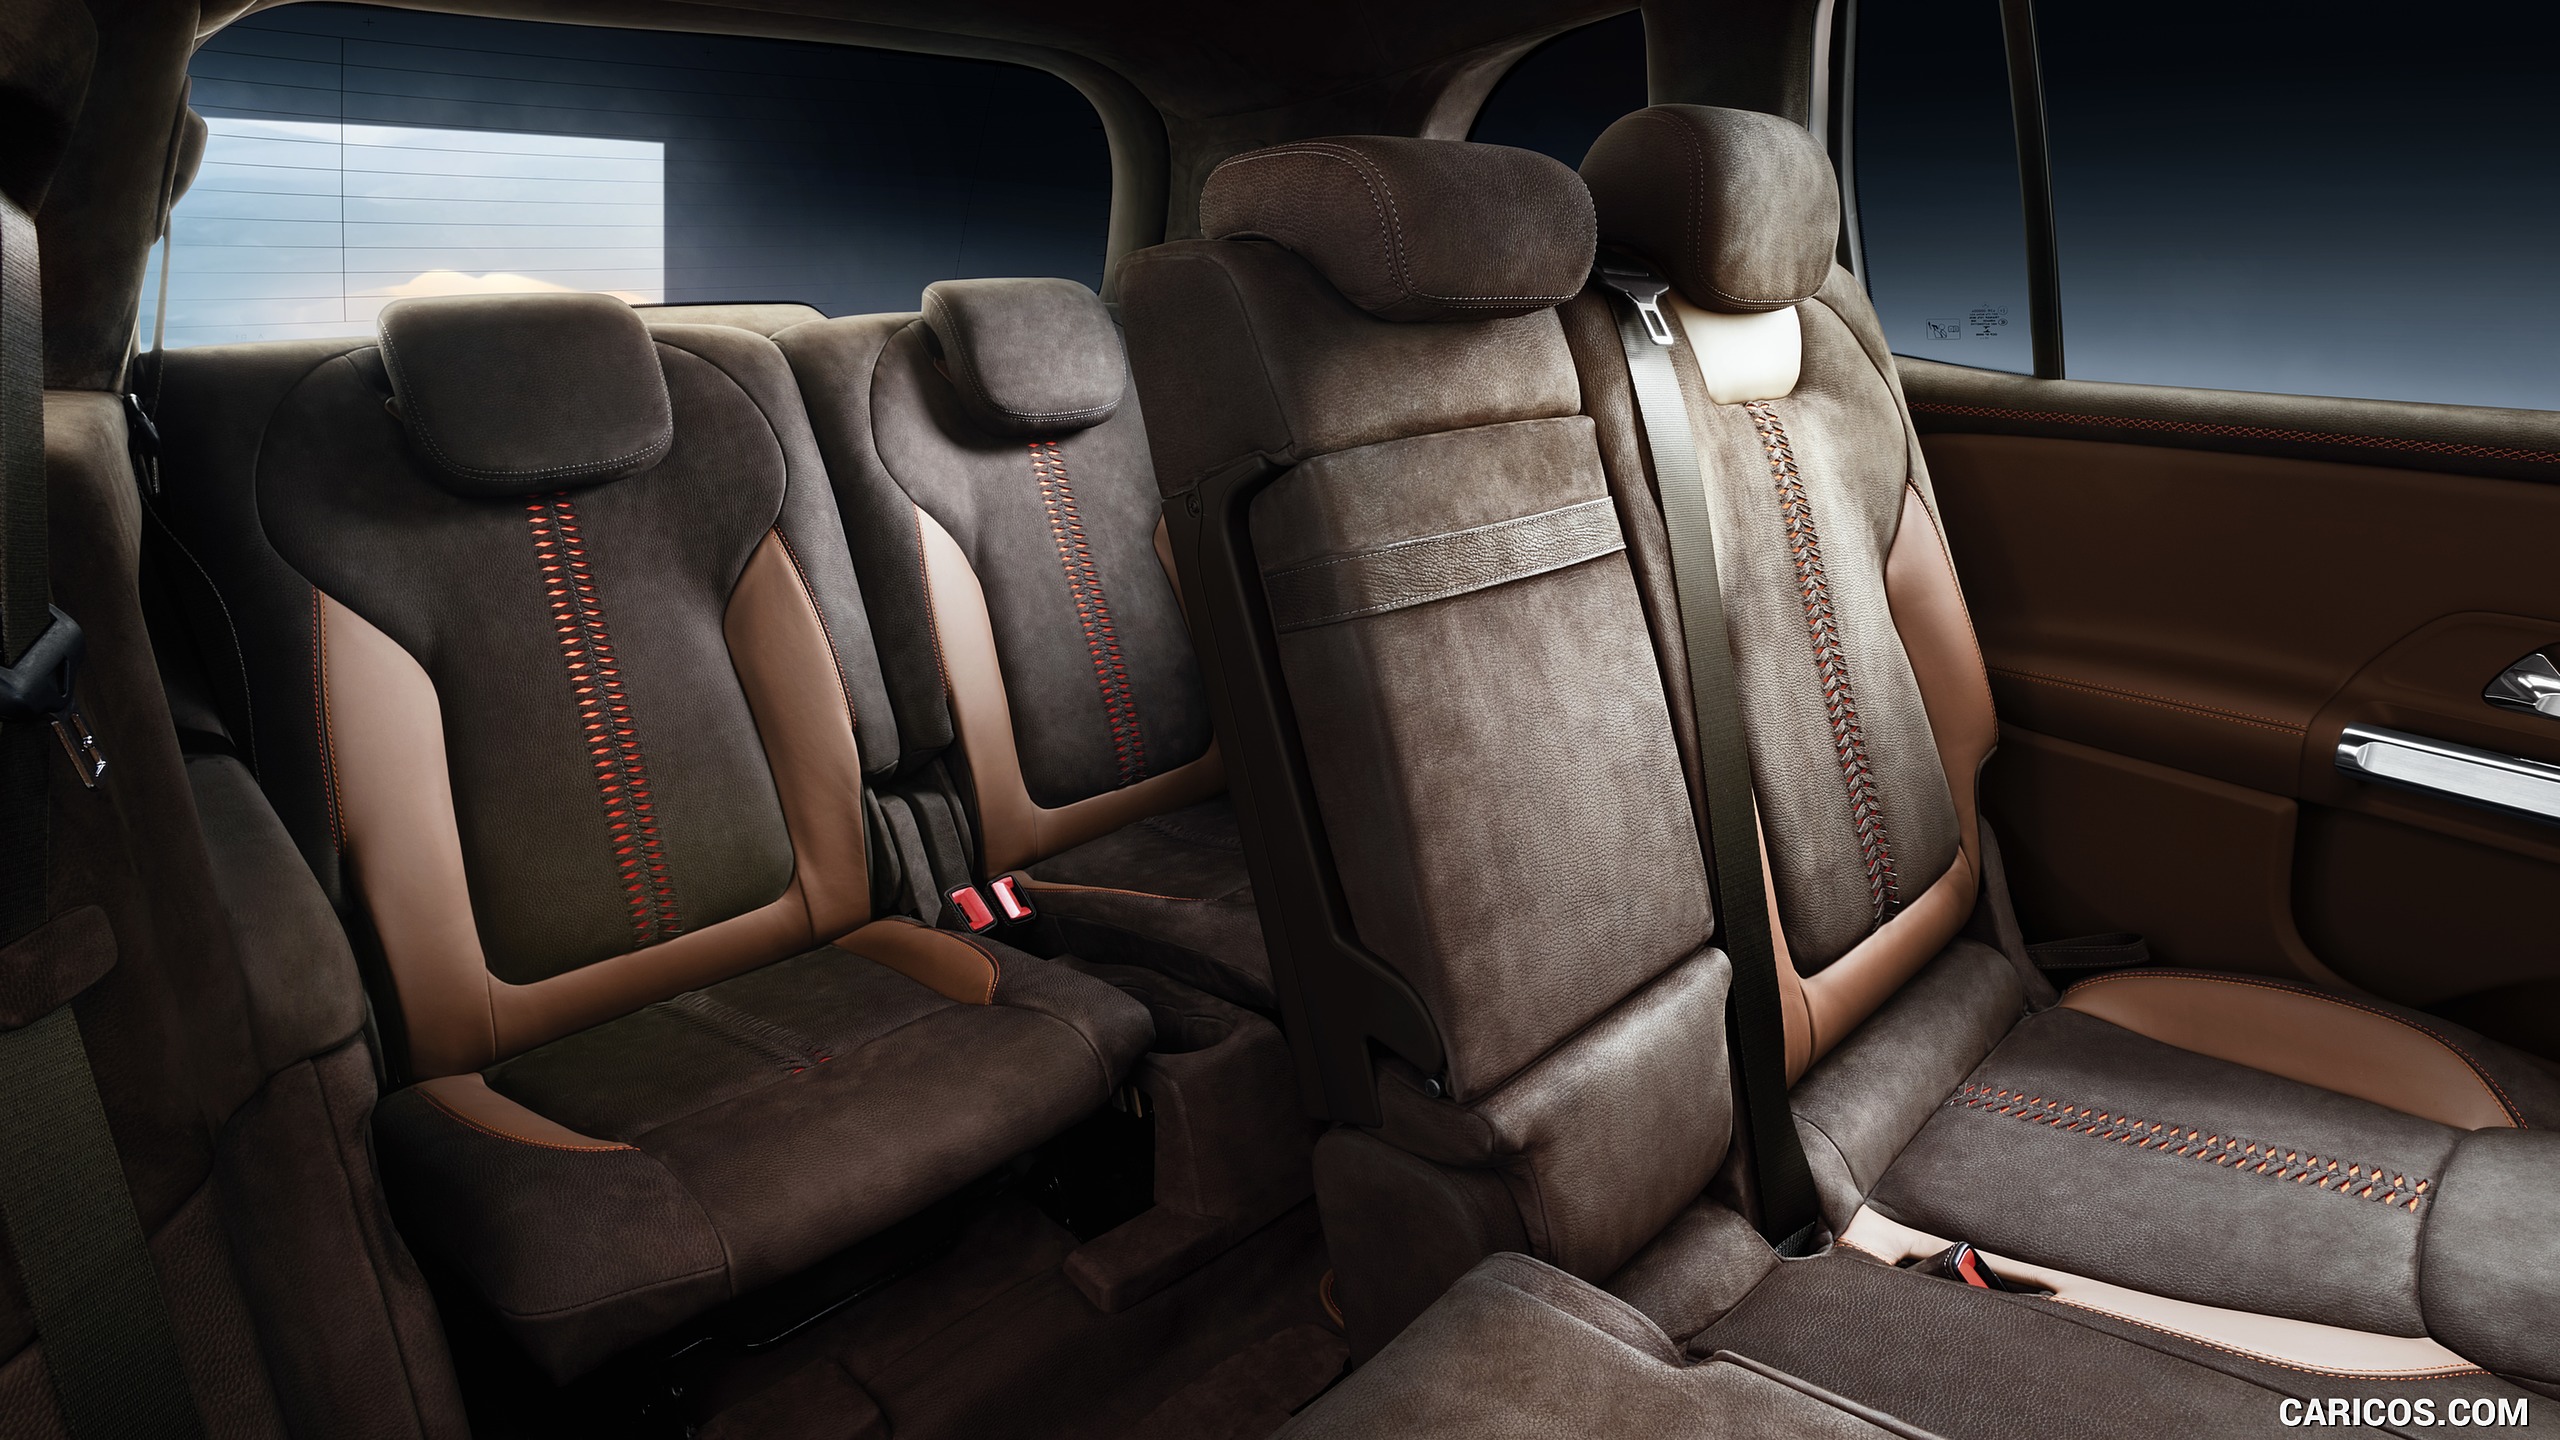 2019 Mercedes-Benz GLB Concept - Interior, Third Row Seats, #16 of 20